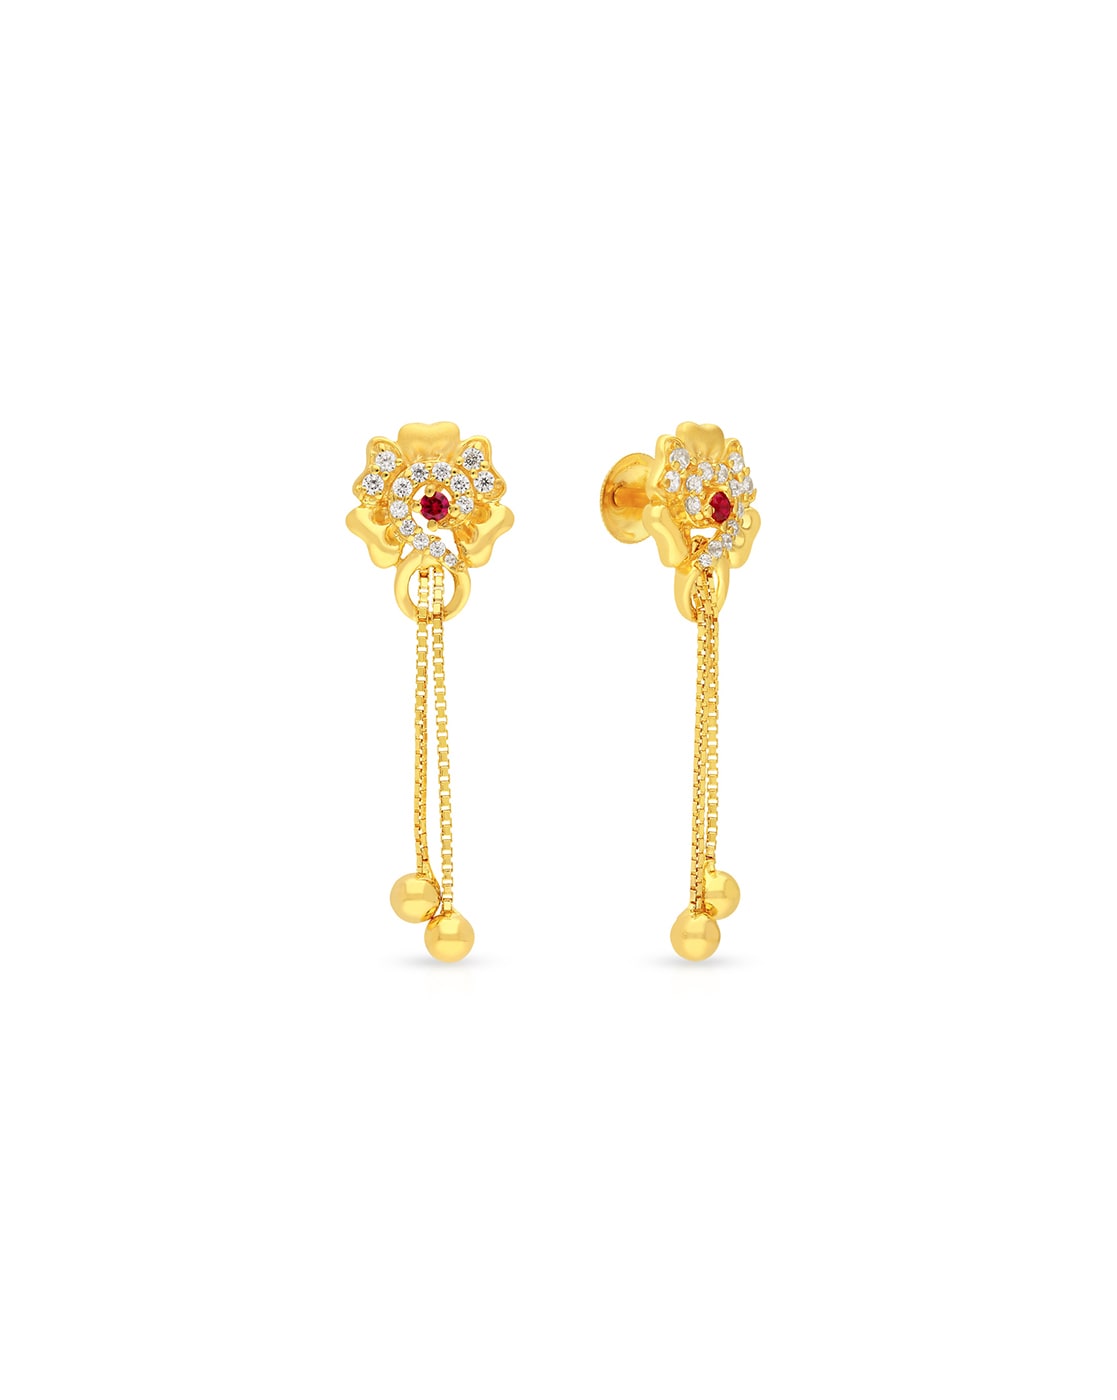 Buy Yellow Gold Earrings for Women by Malabar Gold & Diamonds ...